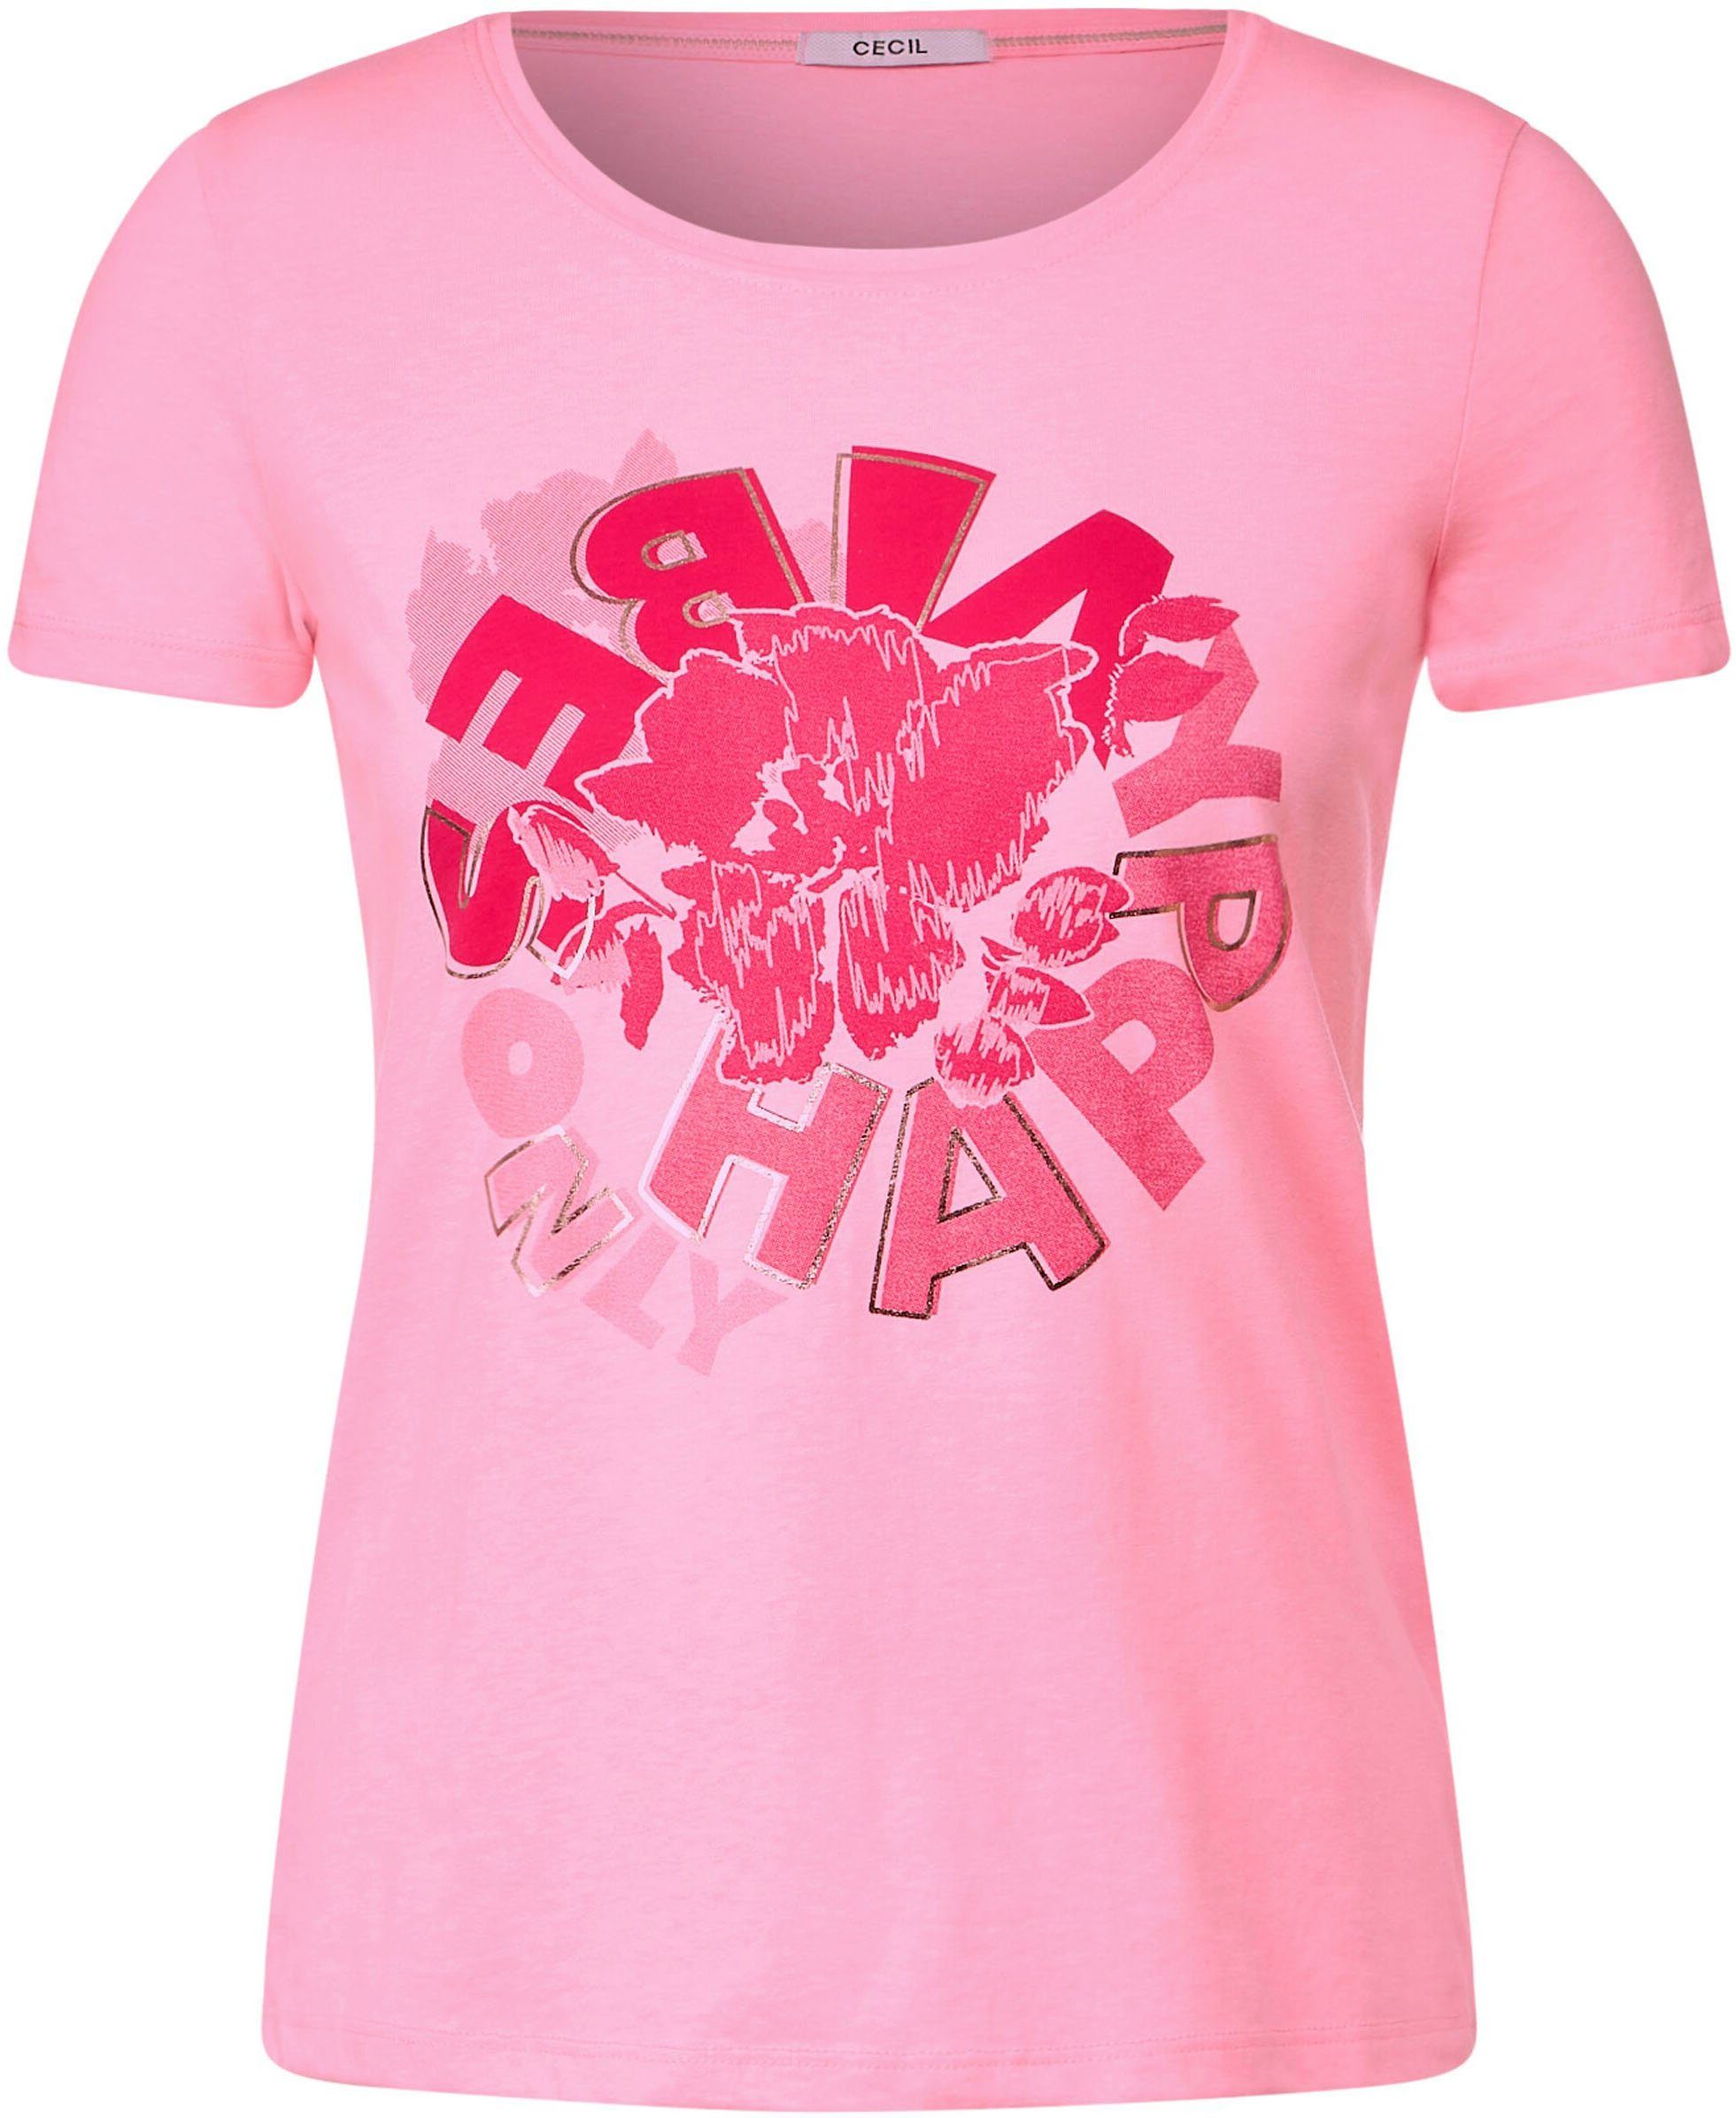 T-Shirt Schnitt soft im hüftlangen Cecil pink neon